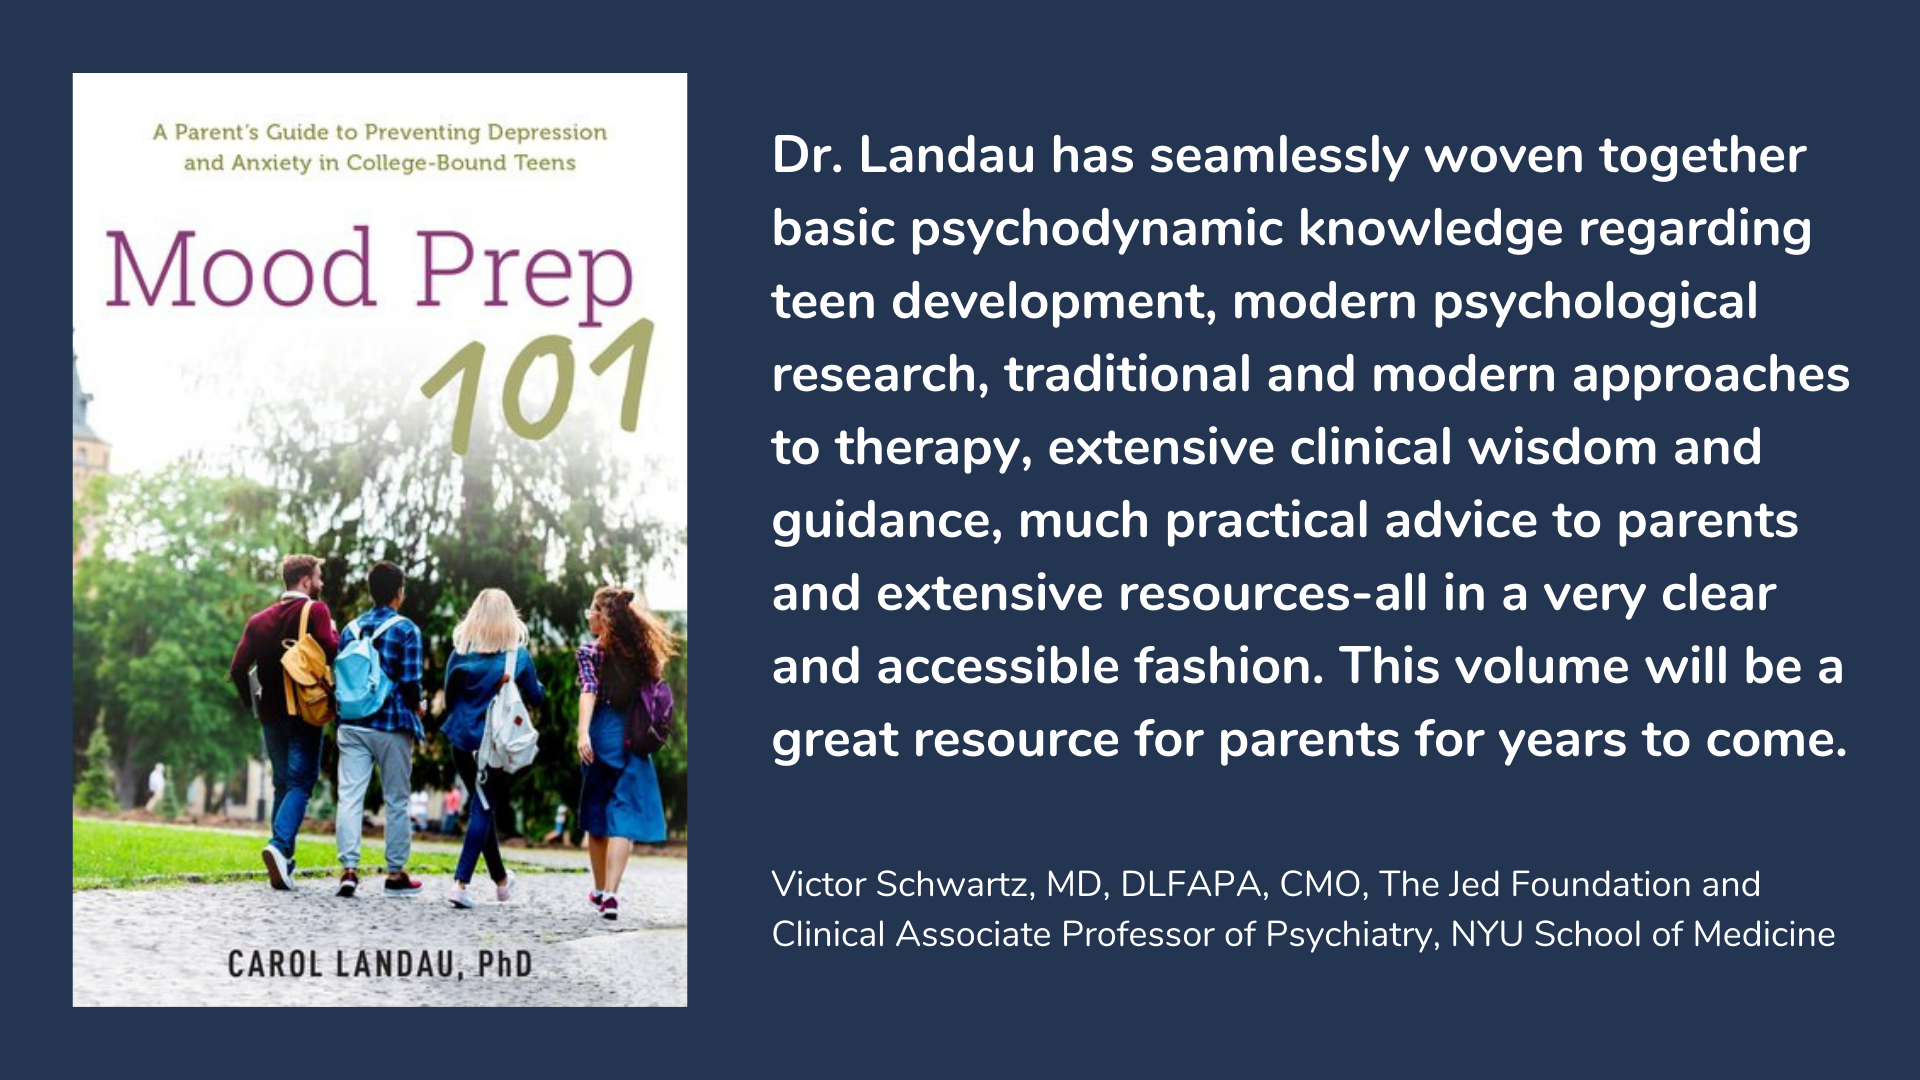 Mood Prep 101 by Carol Landau, PhD book cover and description.